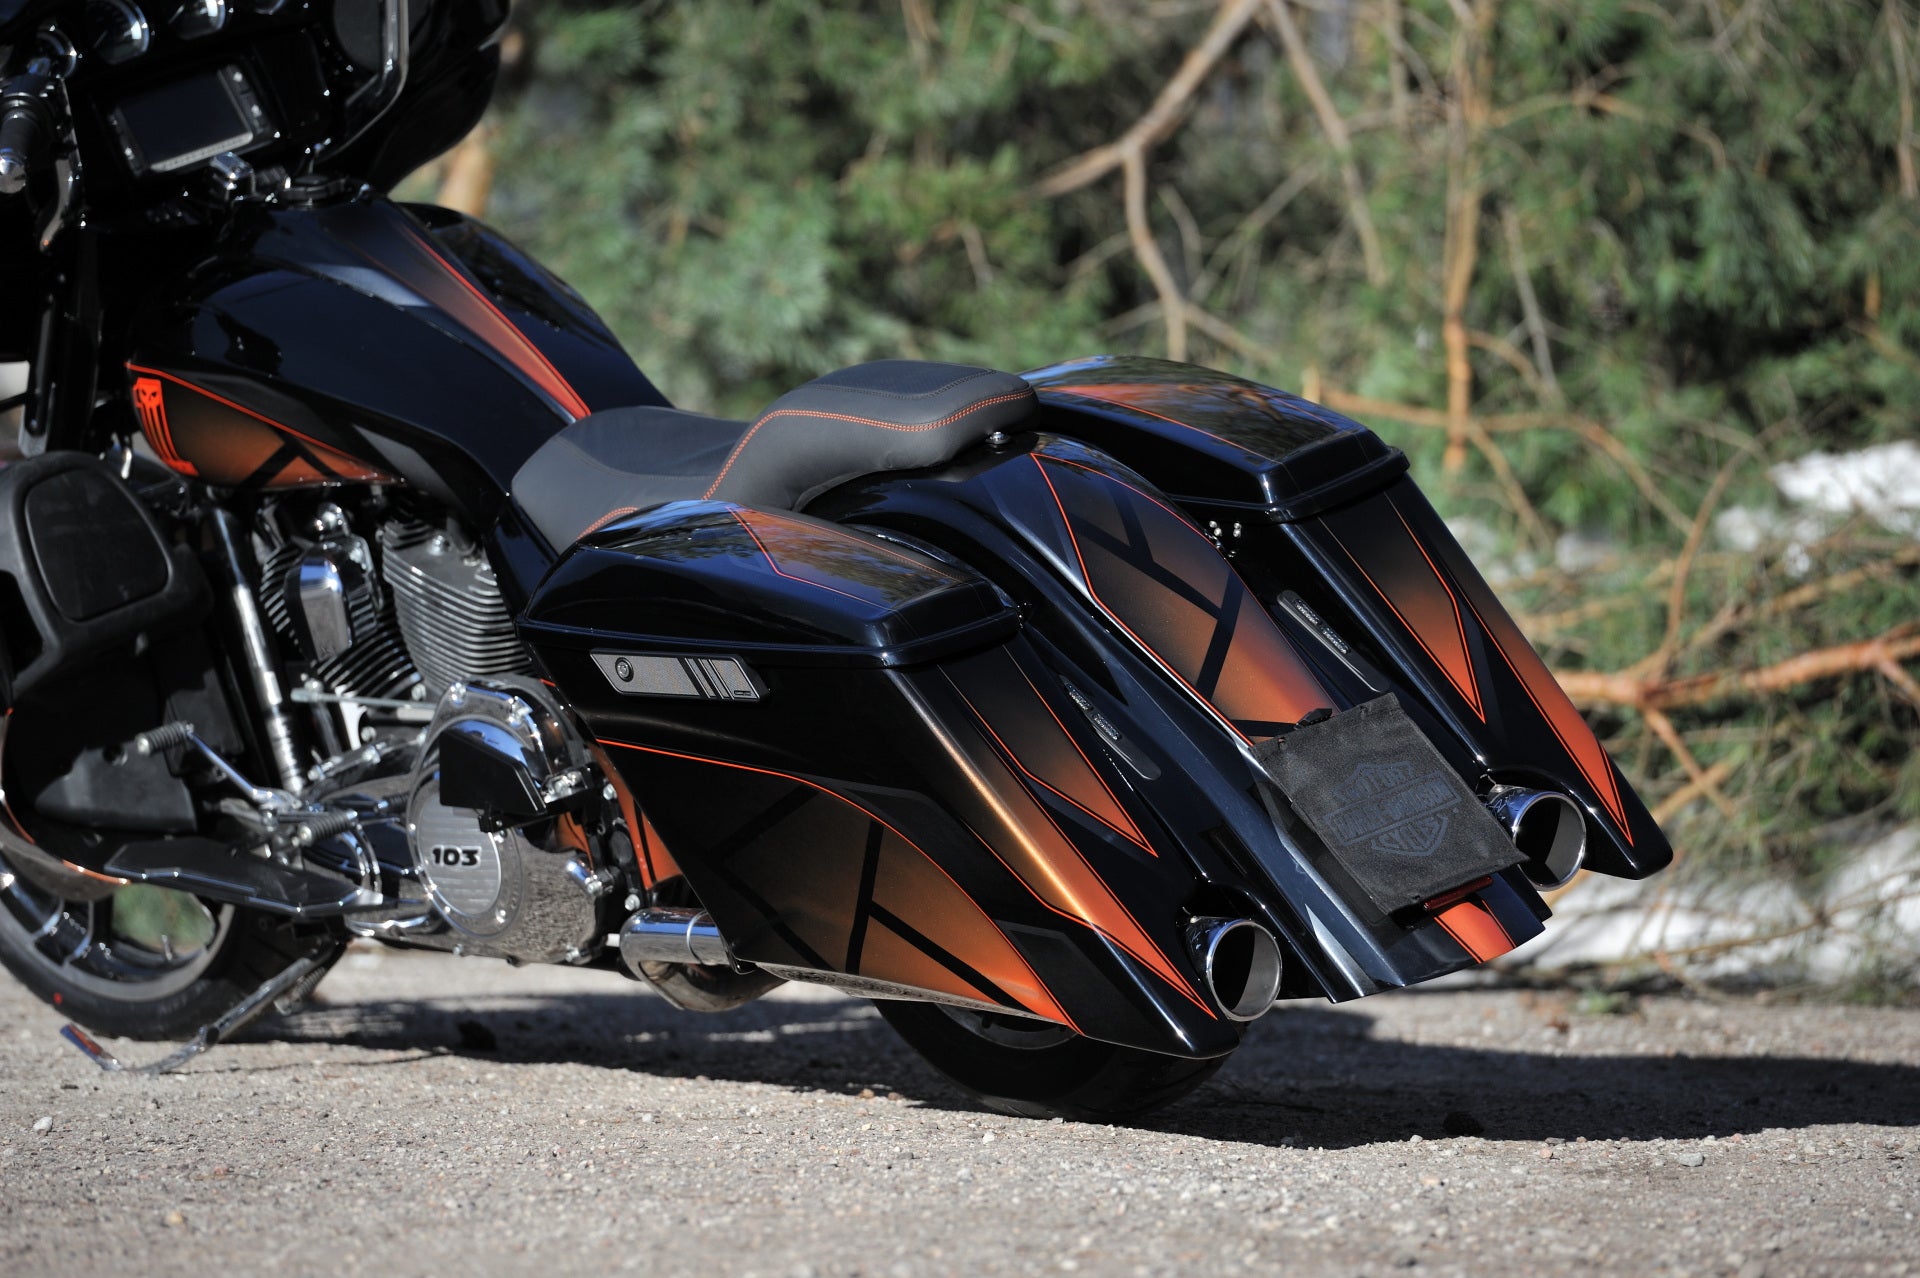 Set of stretched fender and saddlebags Magnus for Harley Davidson Touring 2014 up - Tommy&Sons